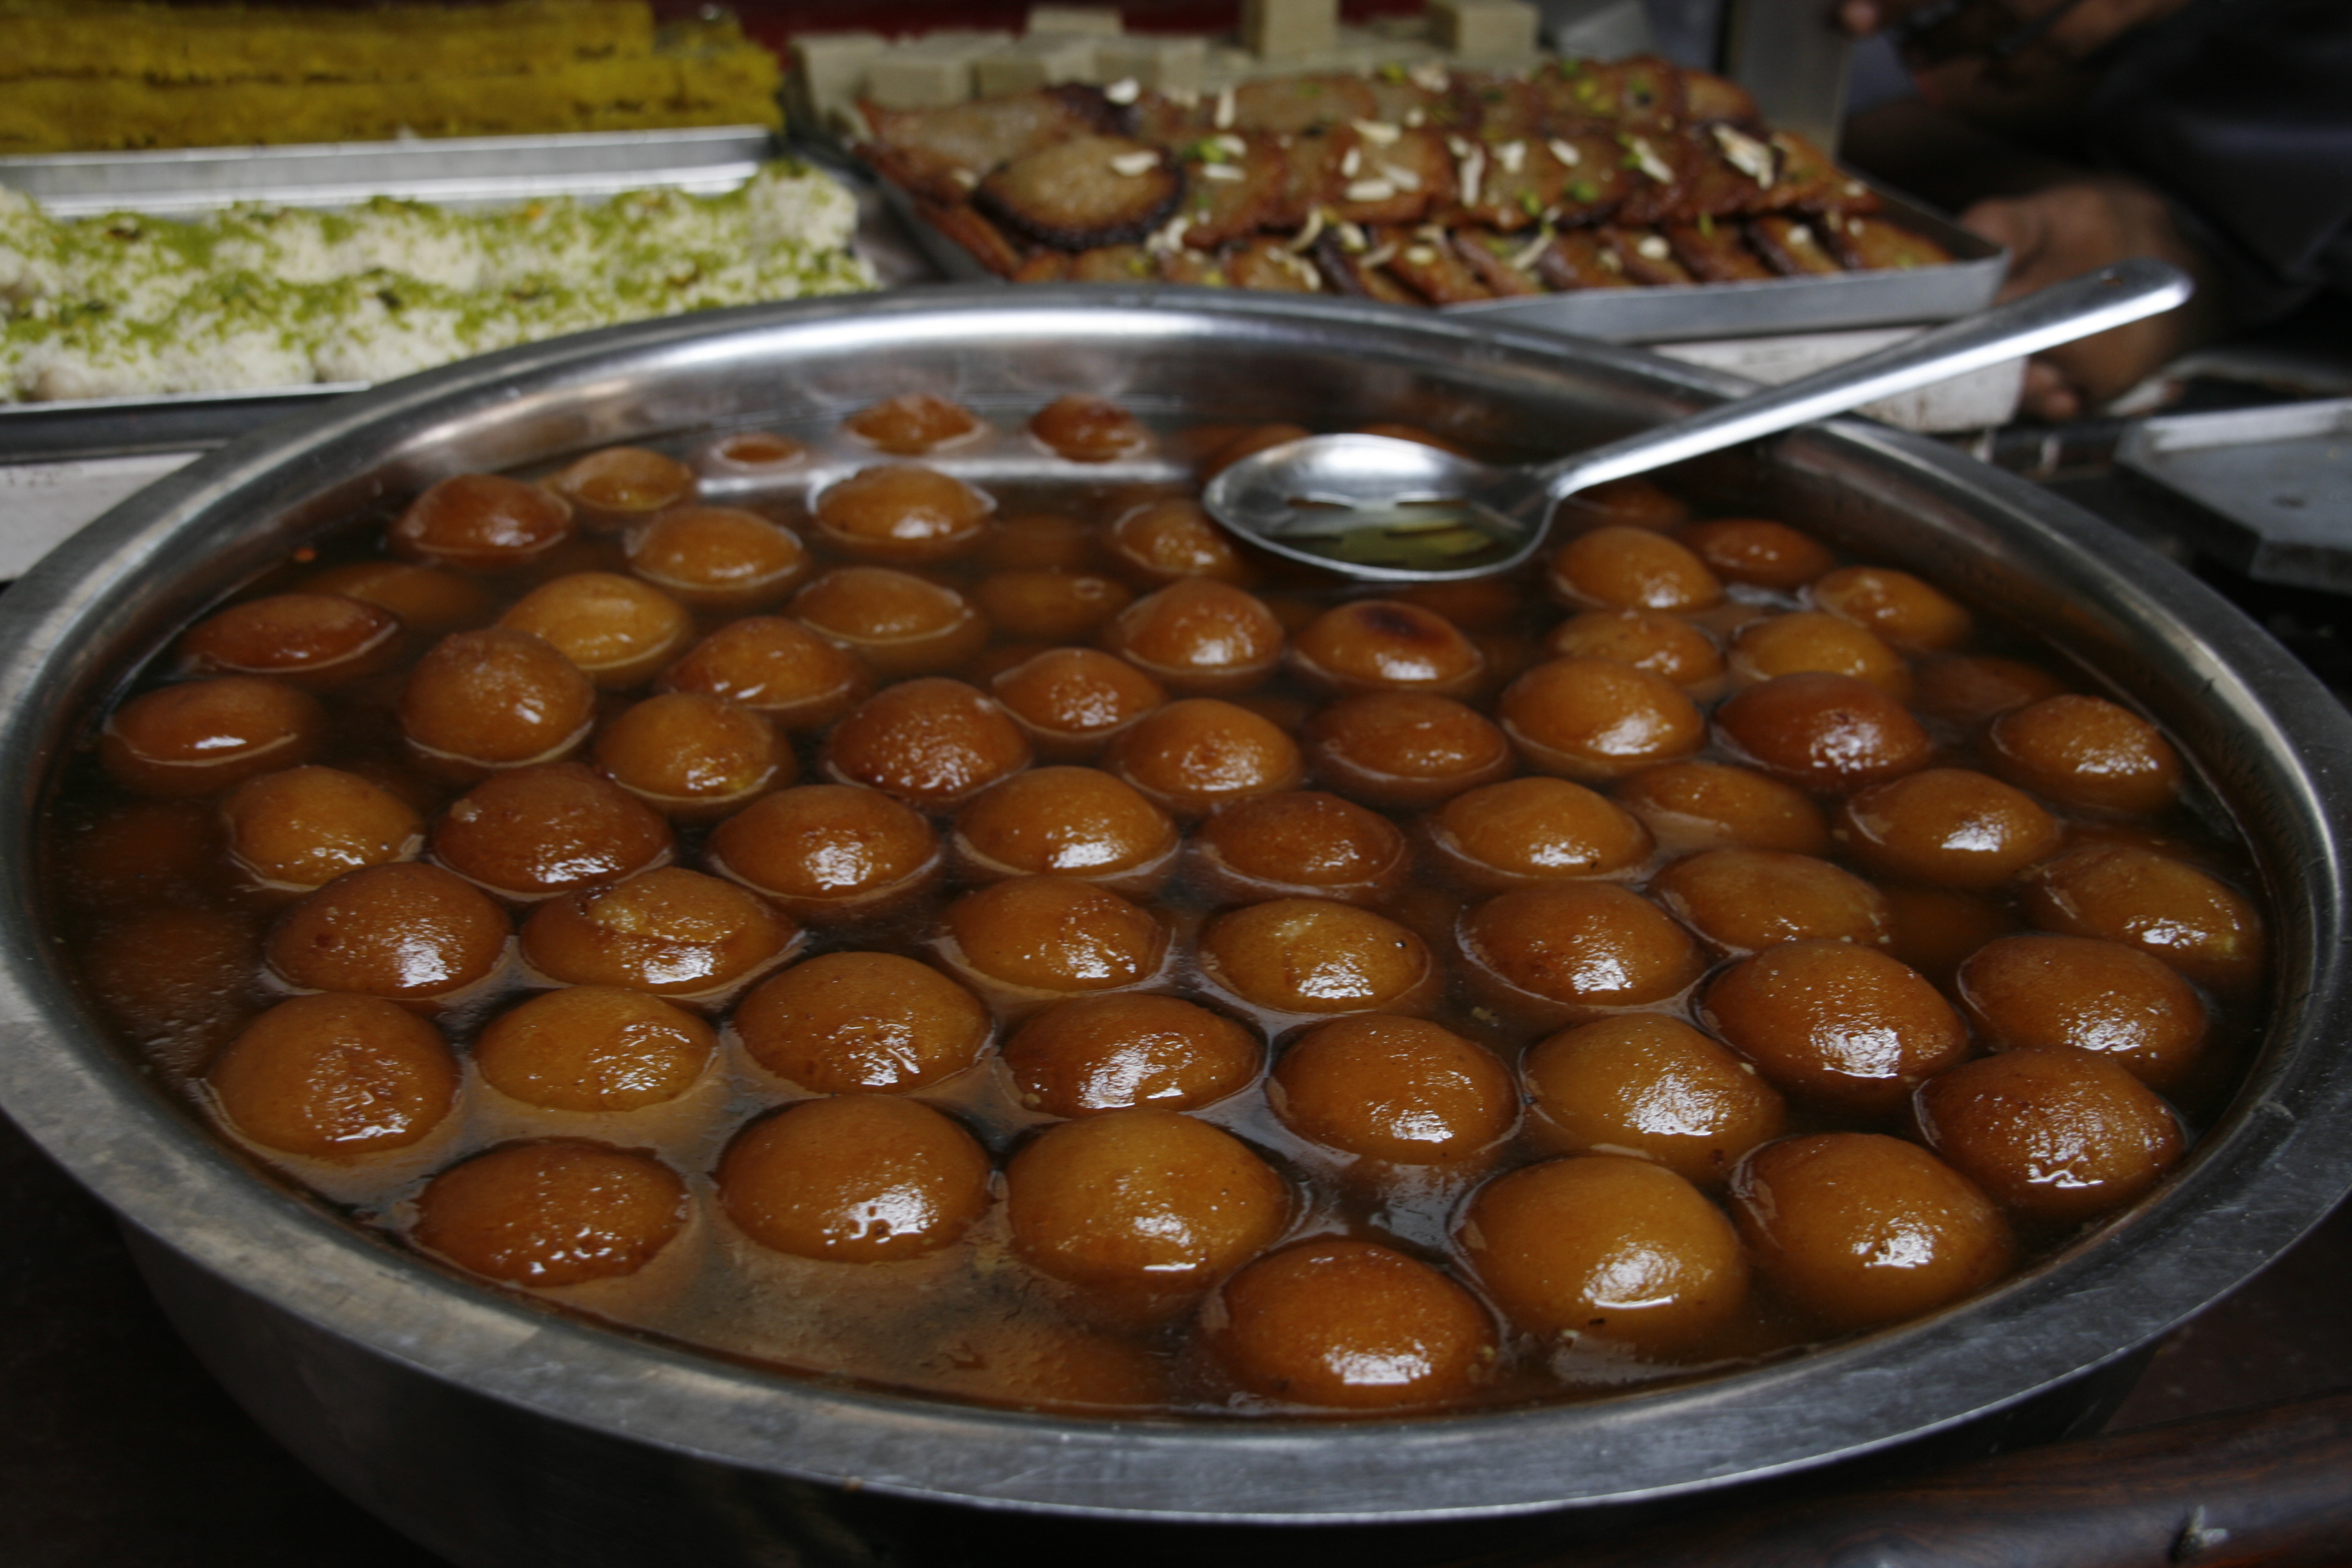 Food from the World: Gulab Jamun